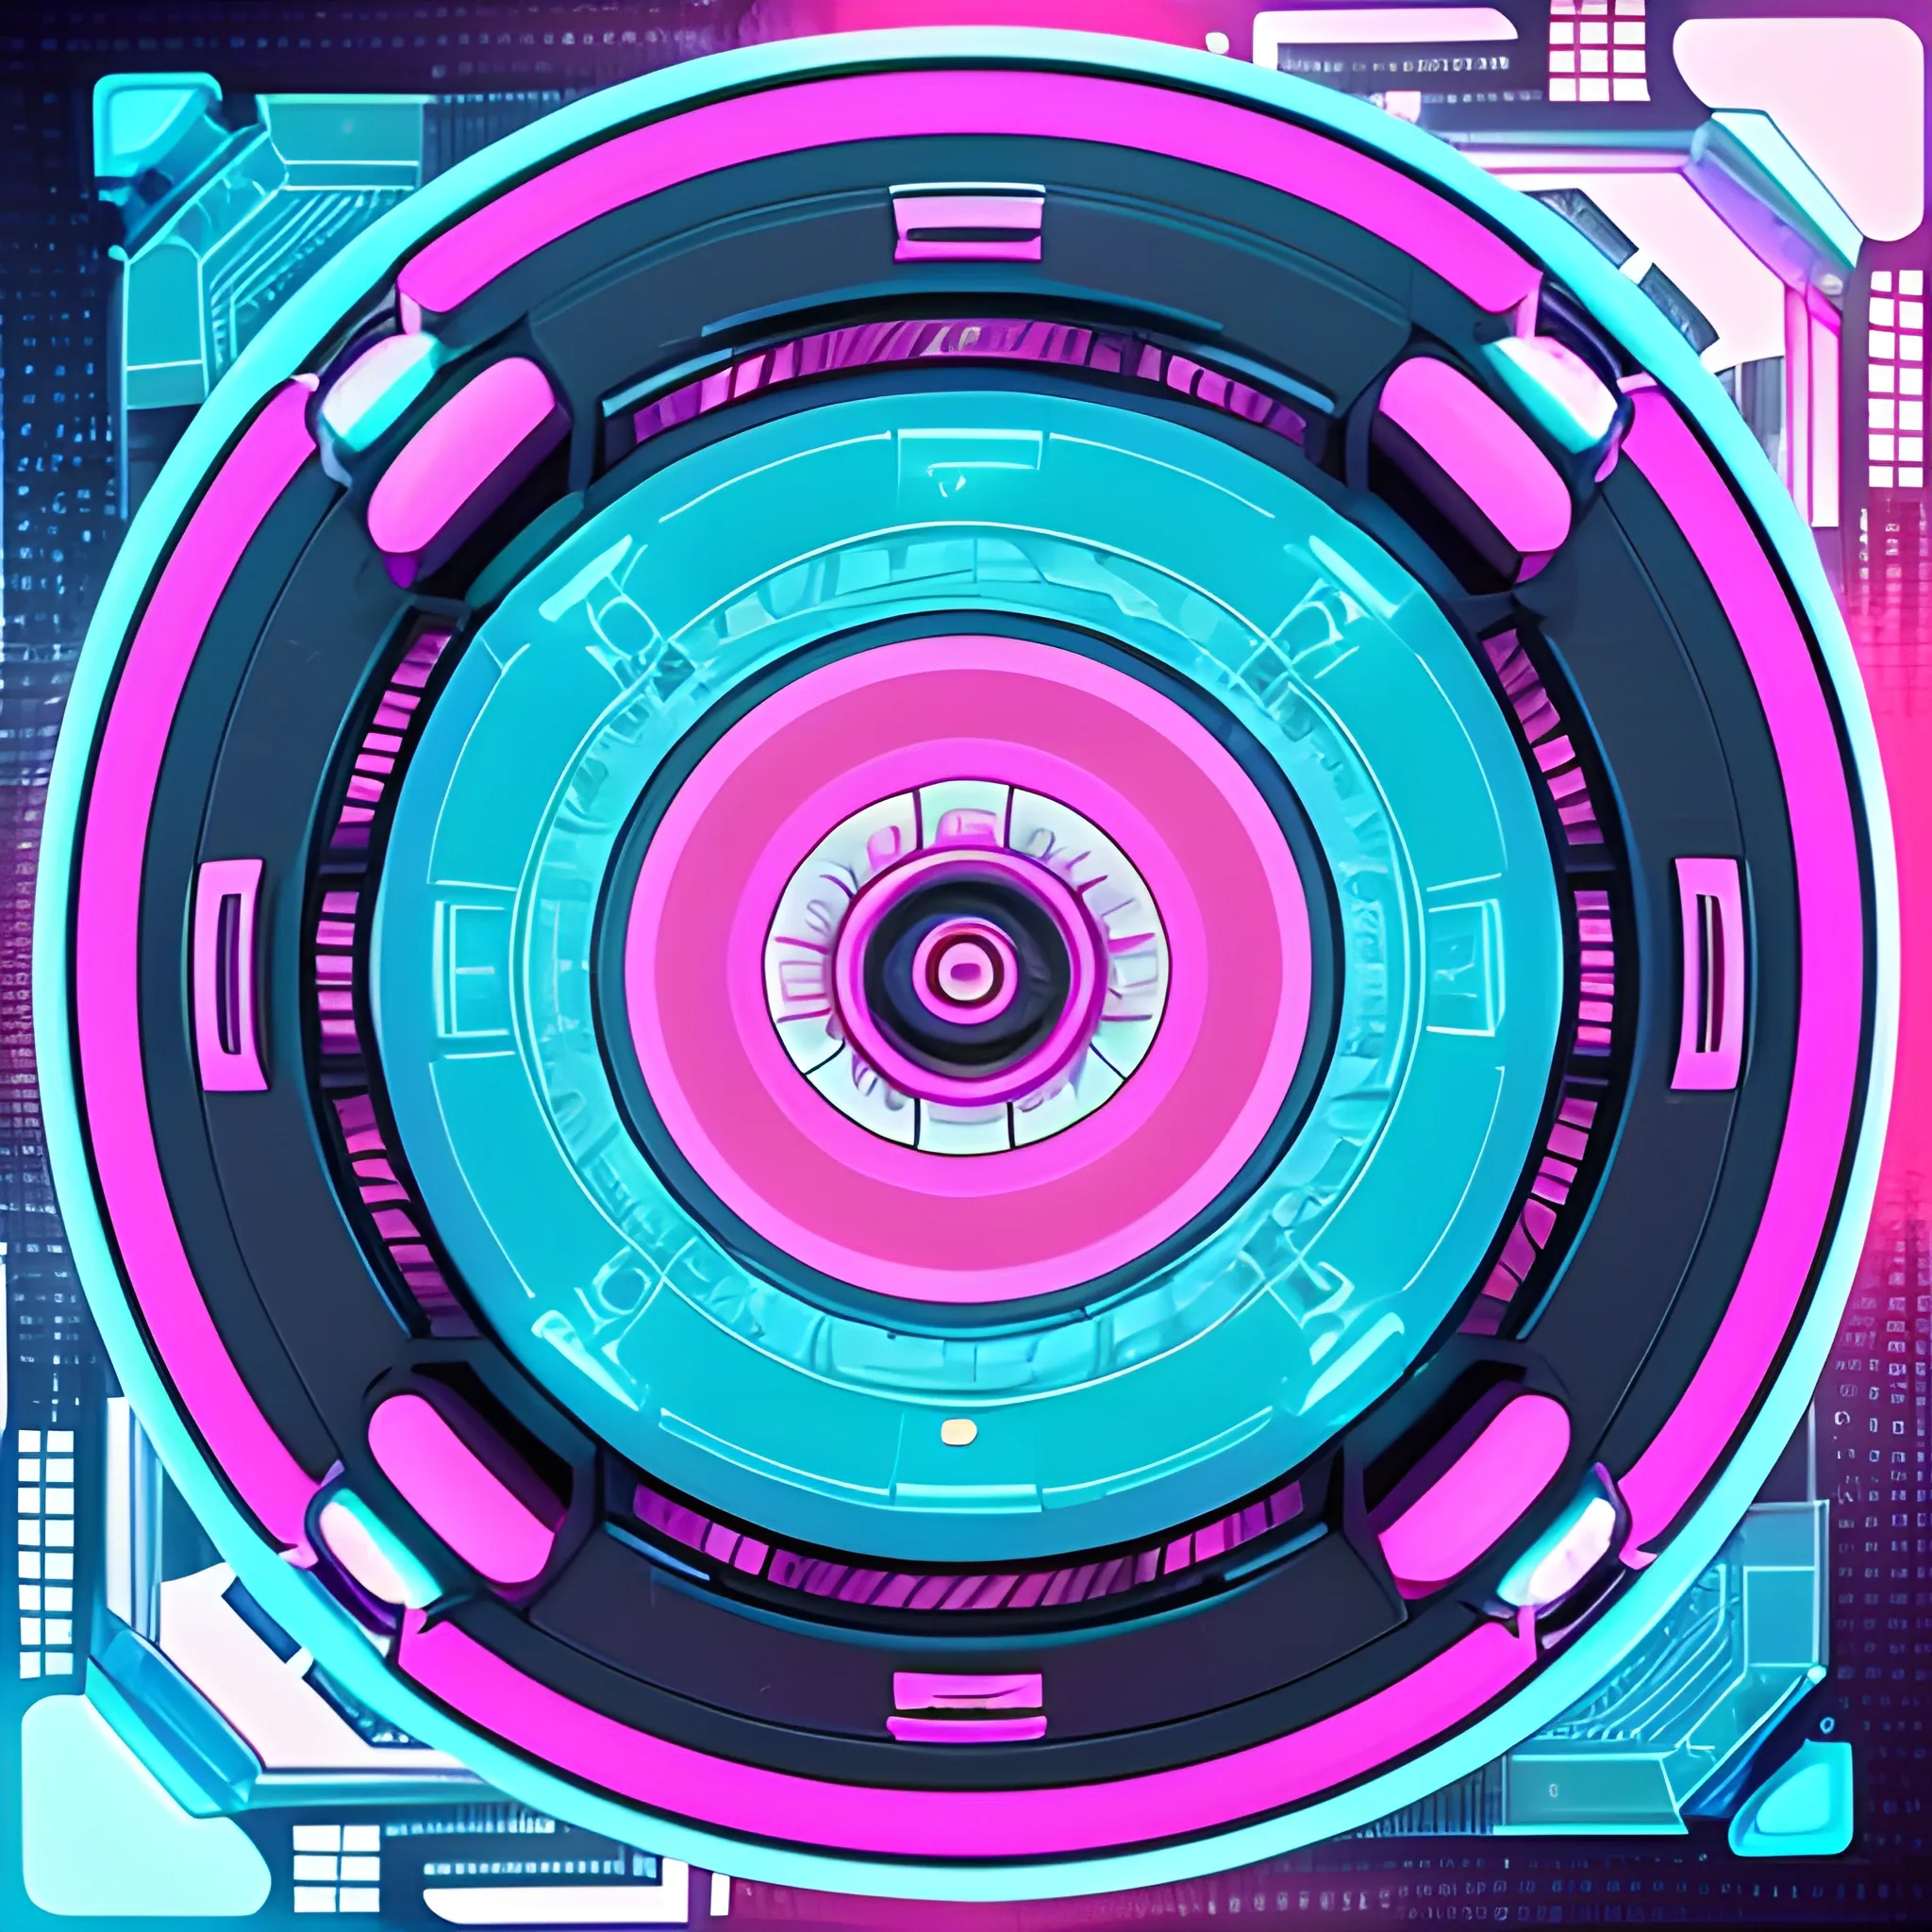 Sci-Fi, Hip-hop, Urban, pink and cyan colored, circular avatar Trippy, Cartoon, intricate detailing, embossed circular subwoofer frame, transparent background